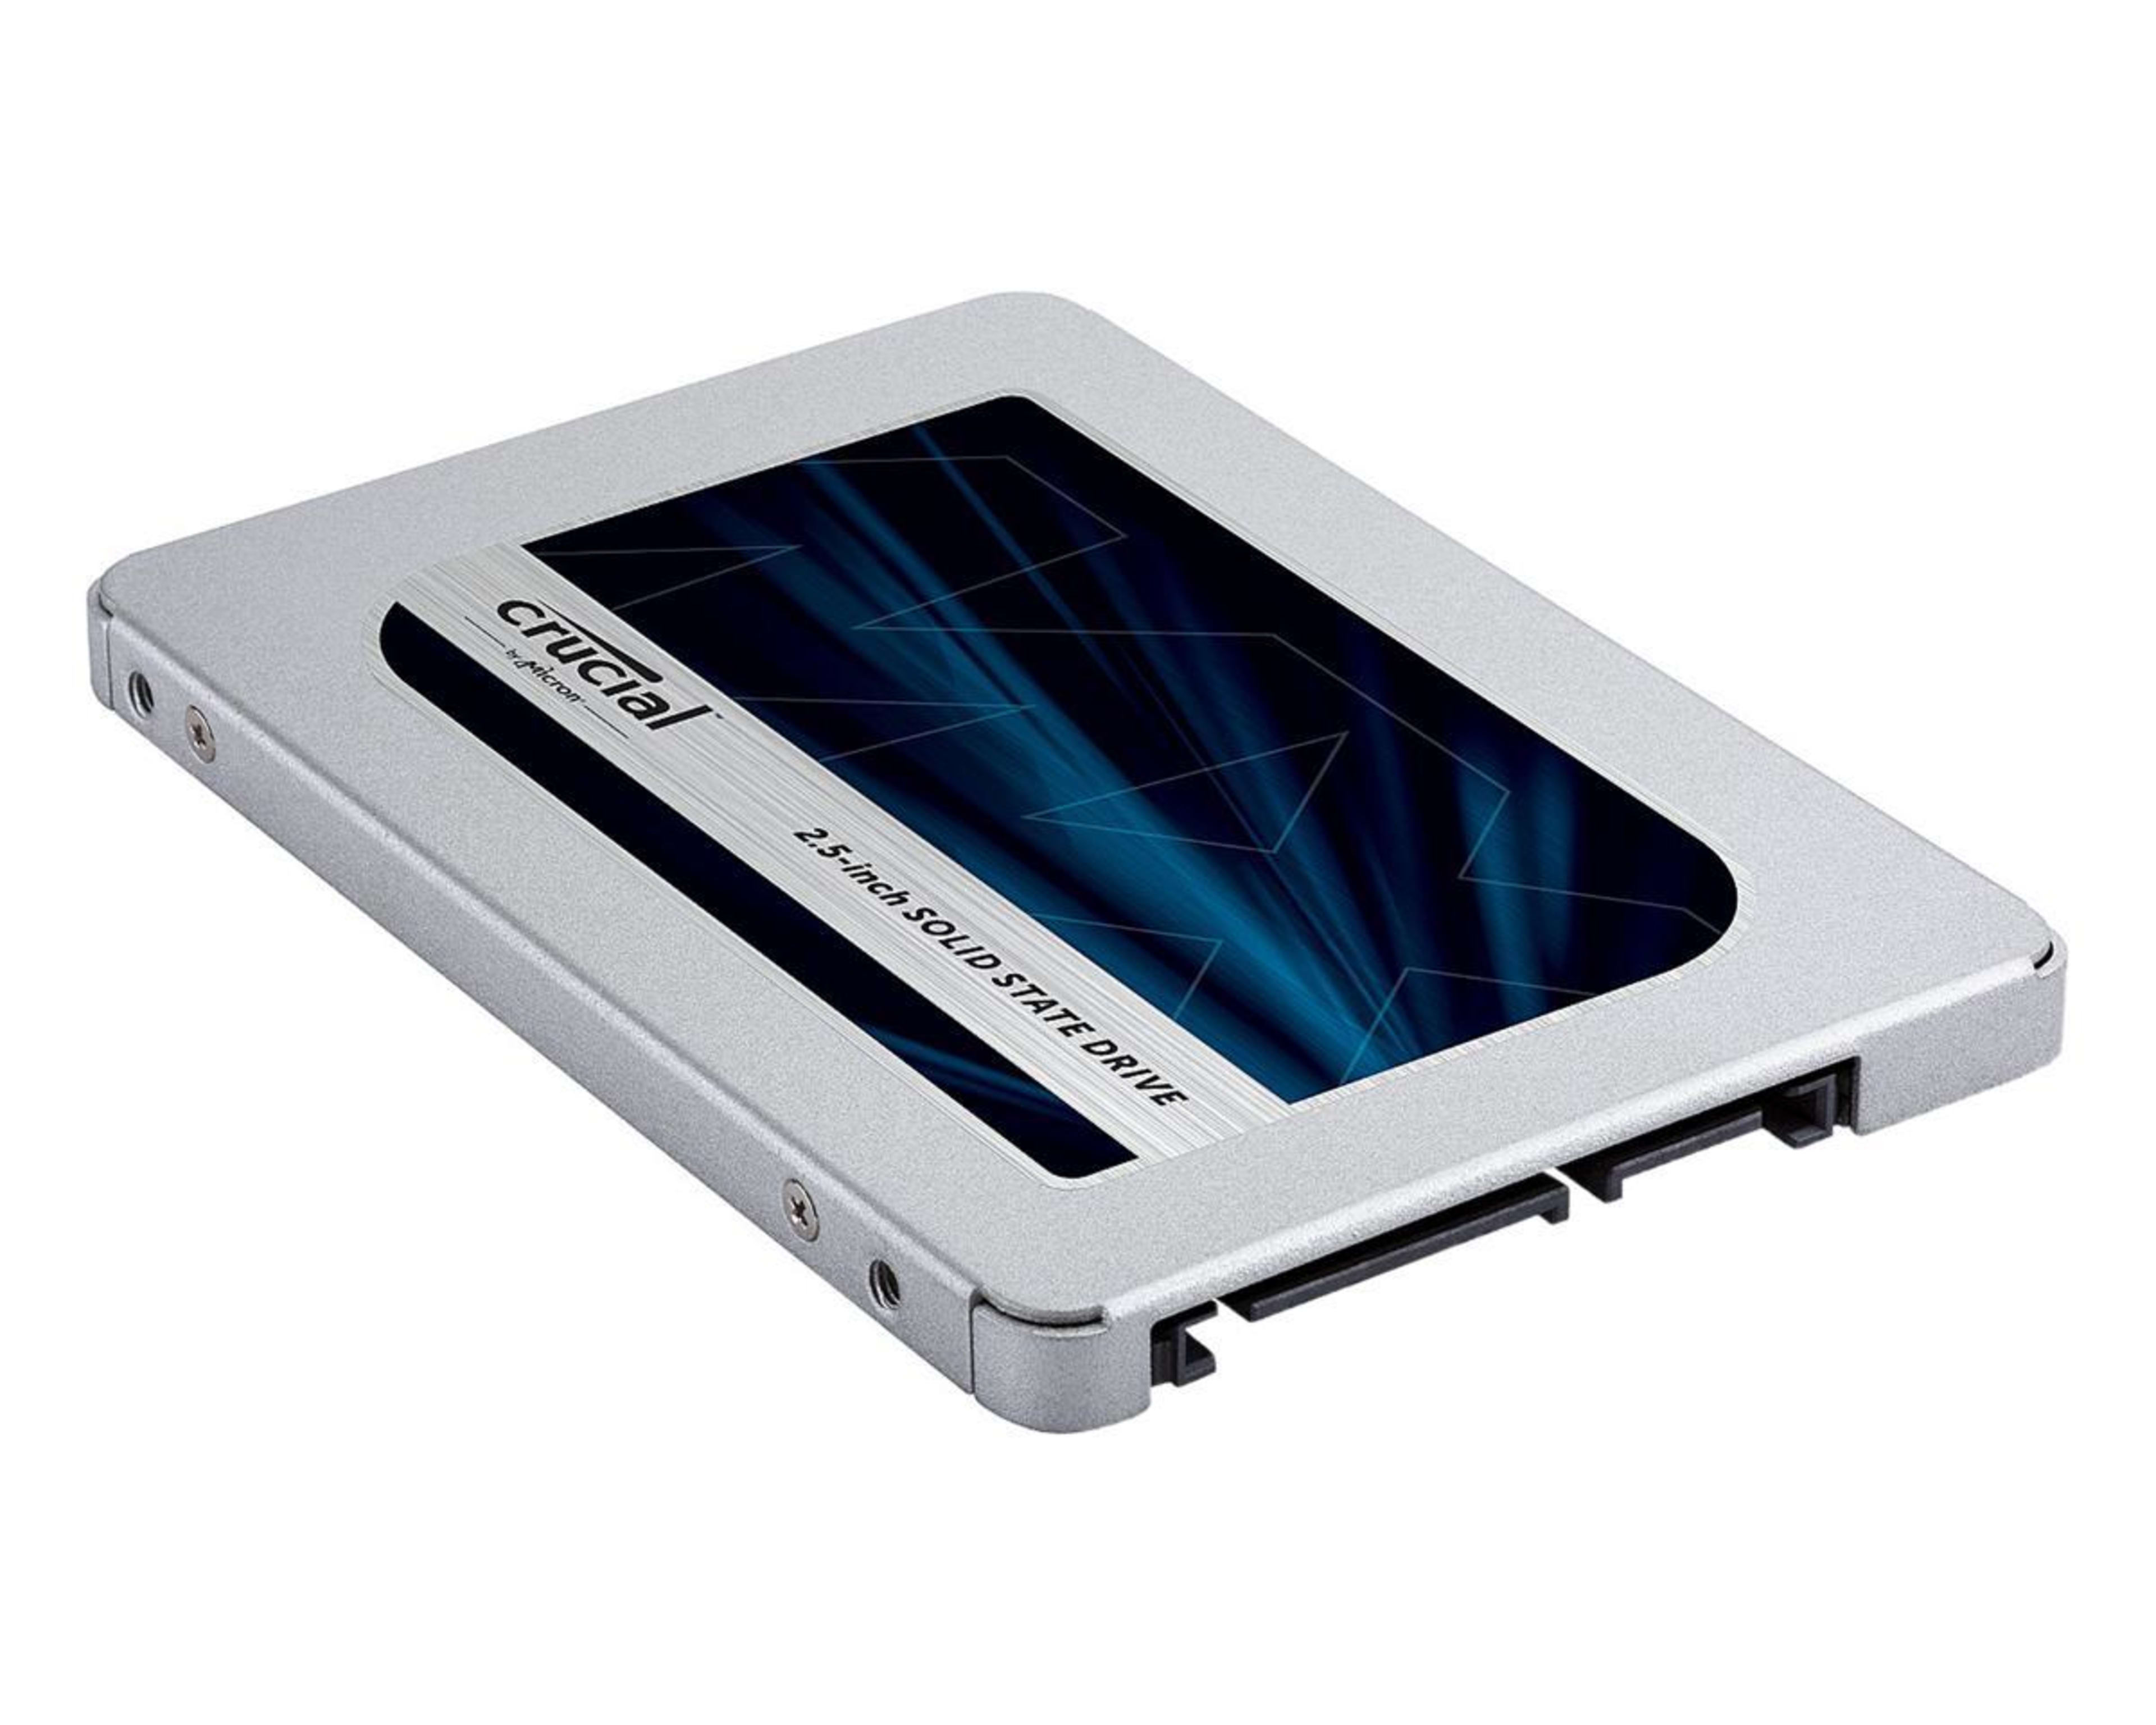 Pre-owned Crucial MX200 250GB SATA 2.5” 6Gb/s SSD Internal Hard Drive